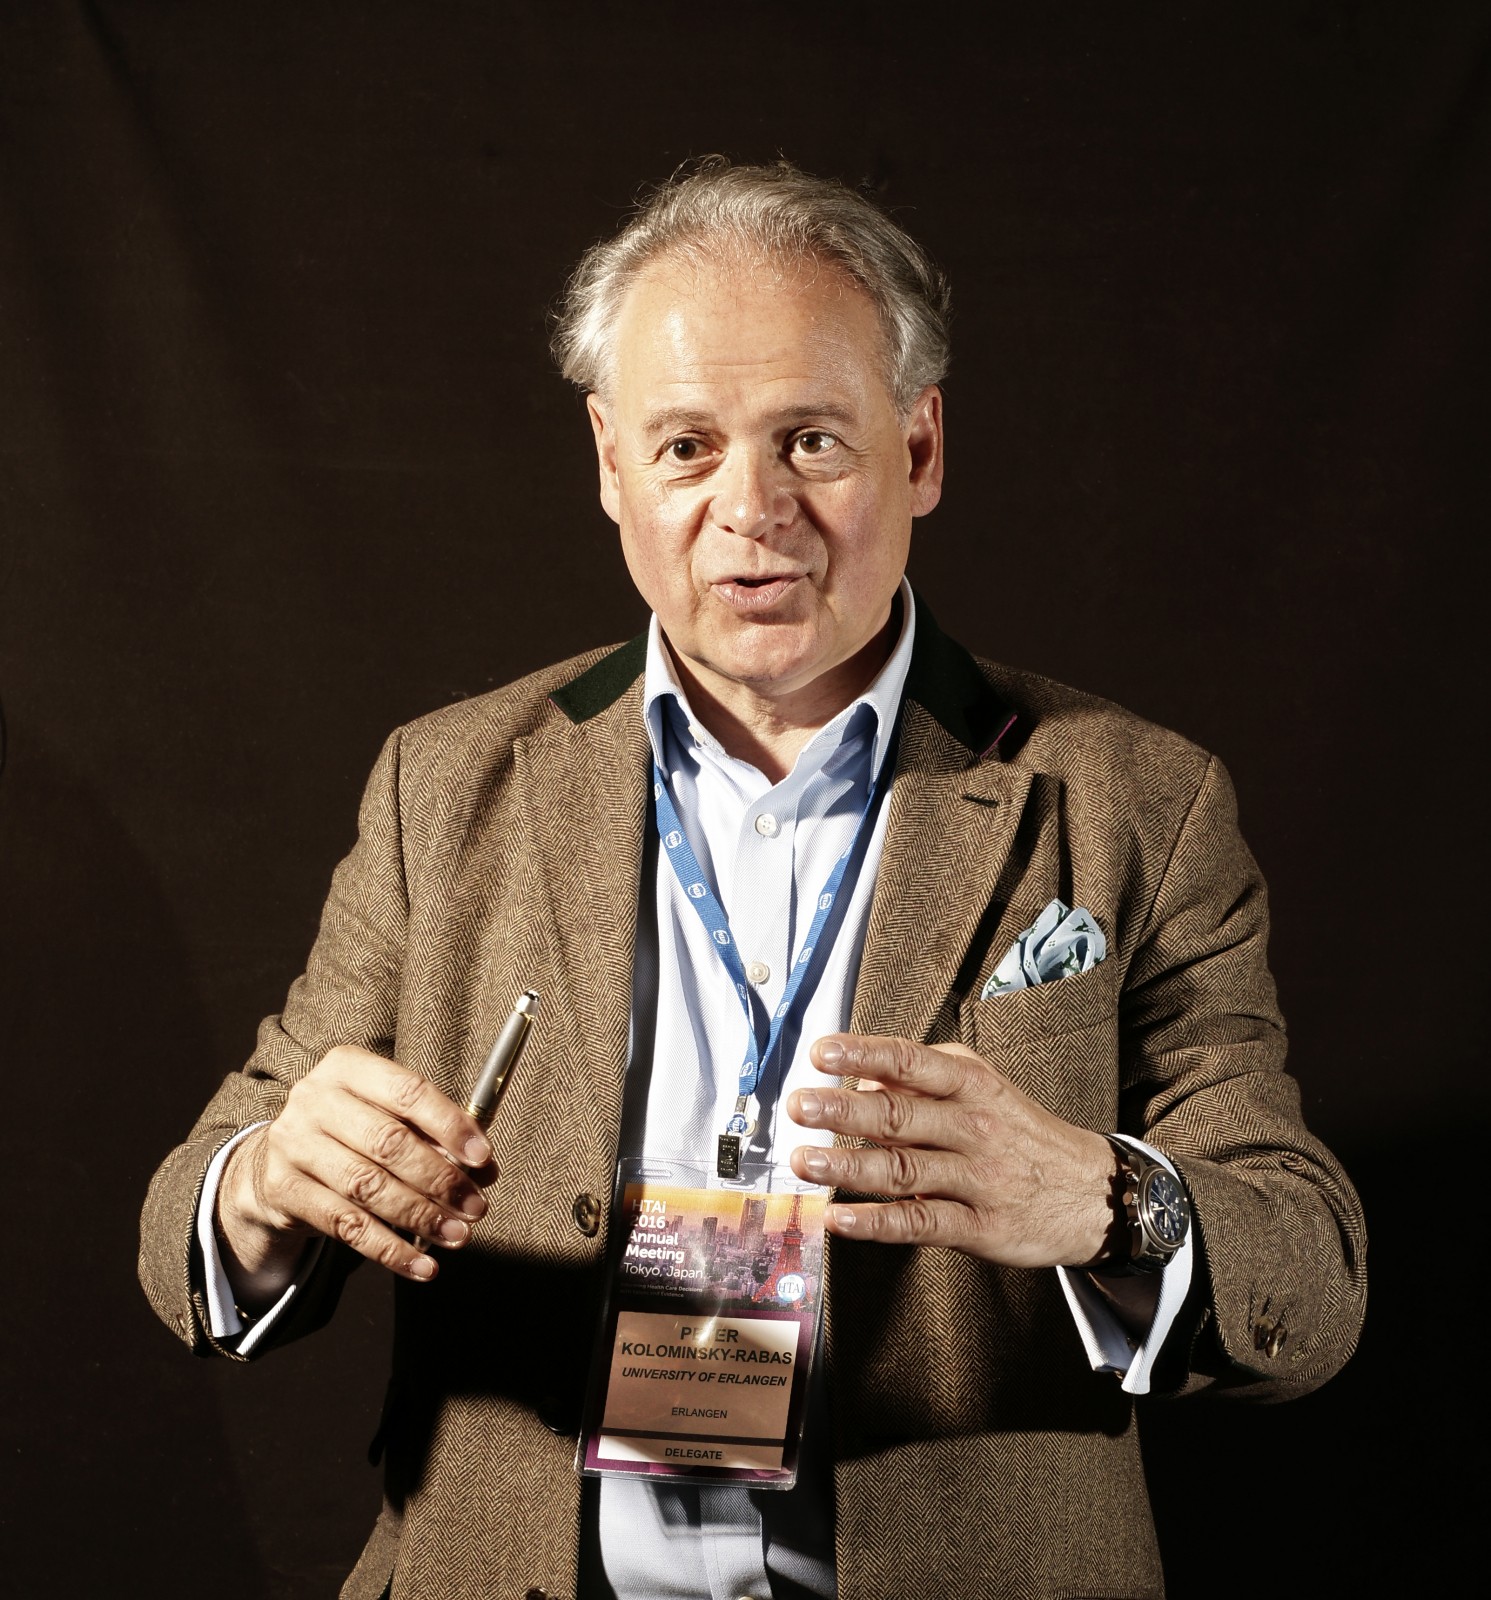 Professor Peter Kolominsky-Rabas